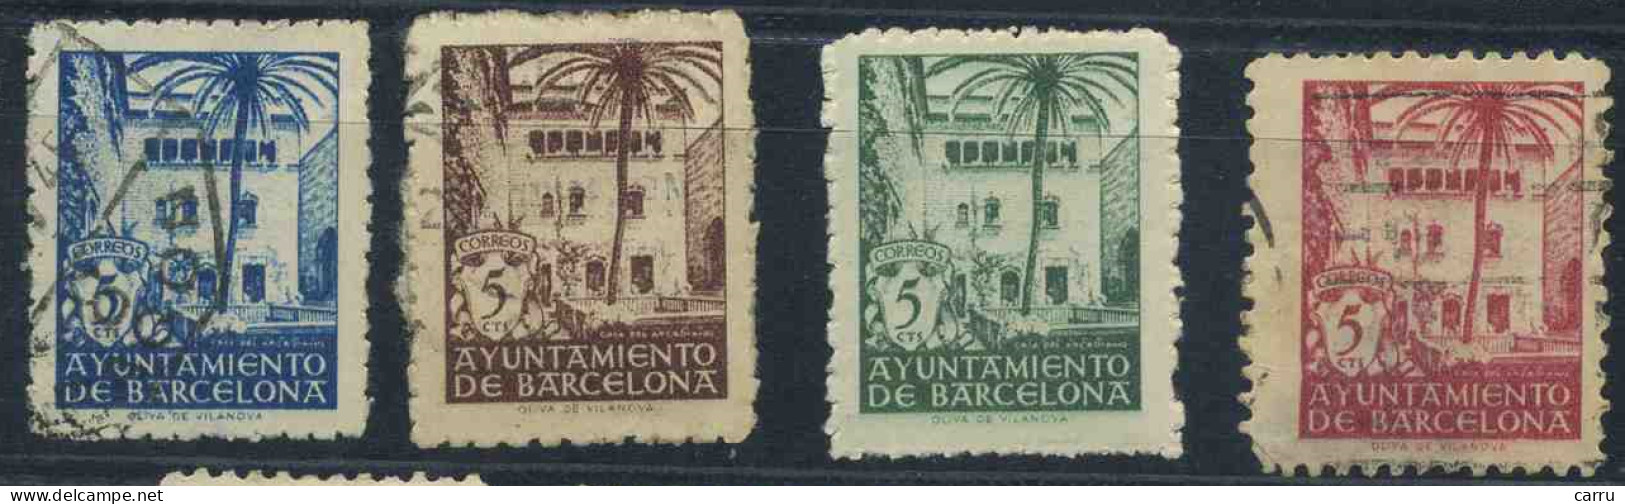 España - Barcelona - 1945 - Barcelone